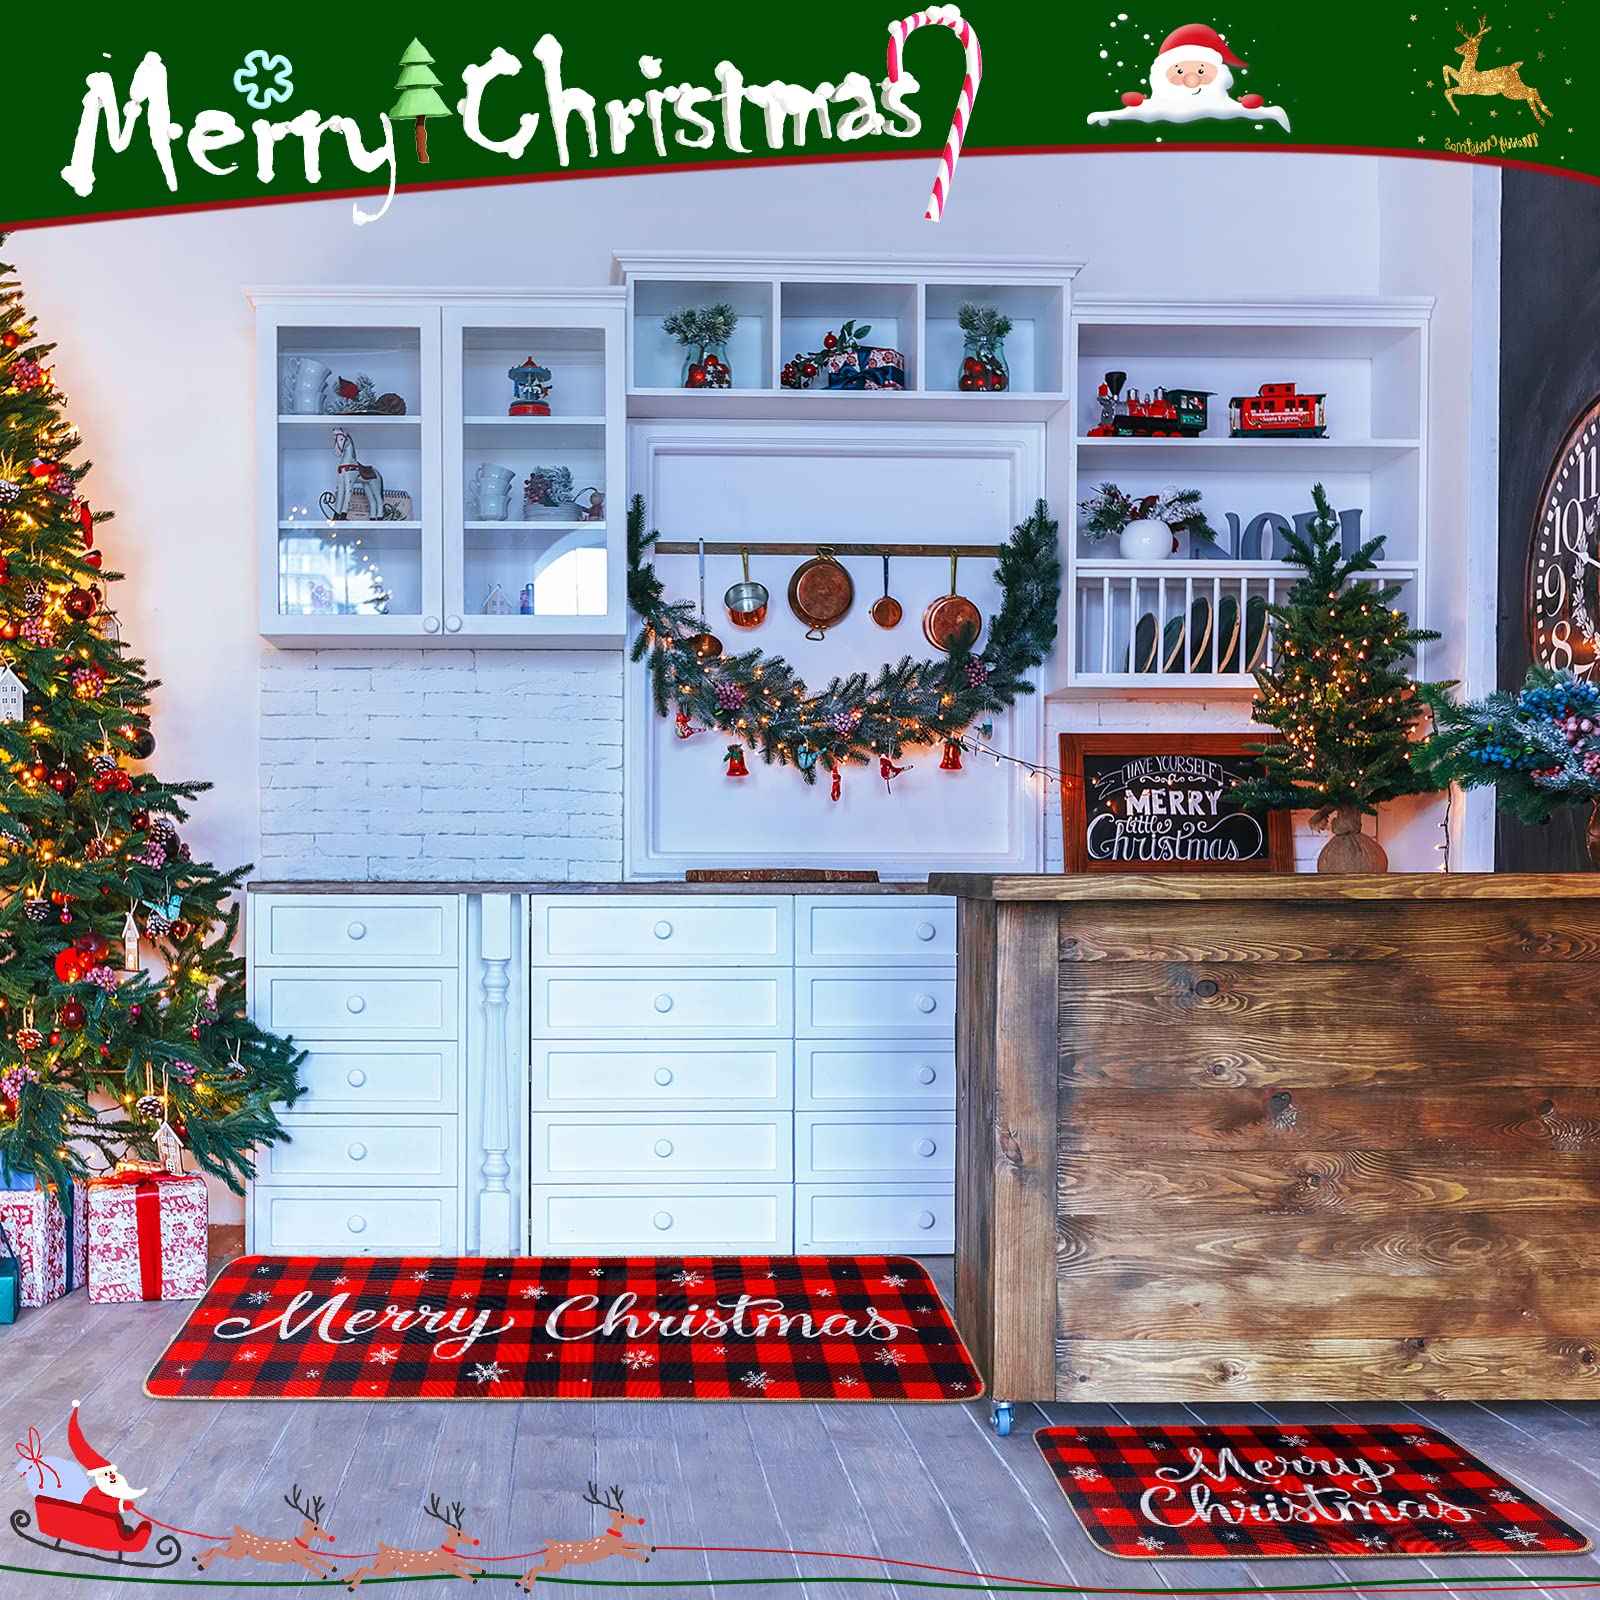 Christmas Kitchen Rugs Set of 2 Xmas Kitchen Mats Merry Christmas Mats Red Black Buffalo Plaid Doormat Christmas Non Slip Backing Floor Mat Xmas Door Mat for Home Kitchen Door Bathroom (Snowflakes)